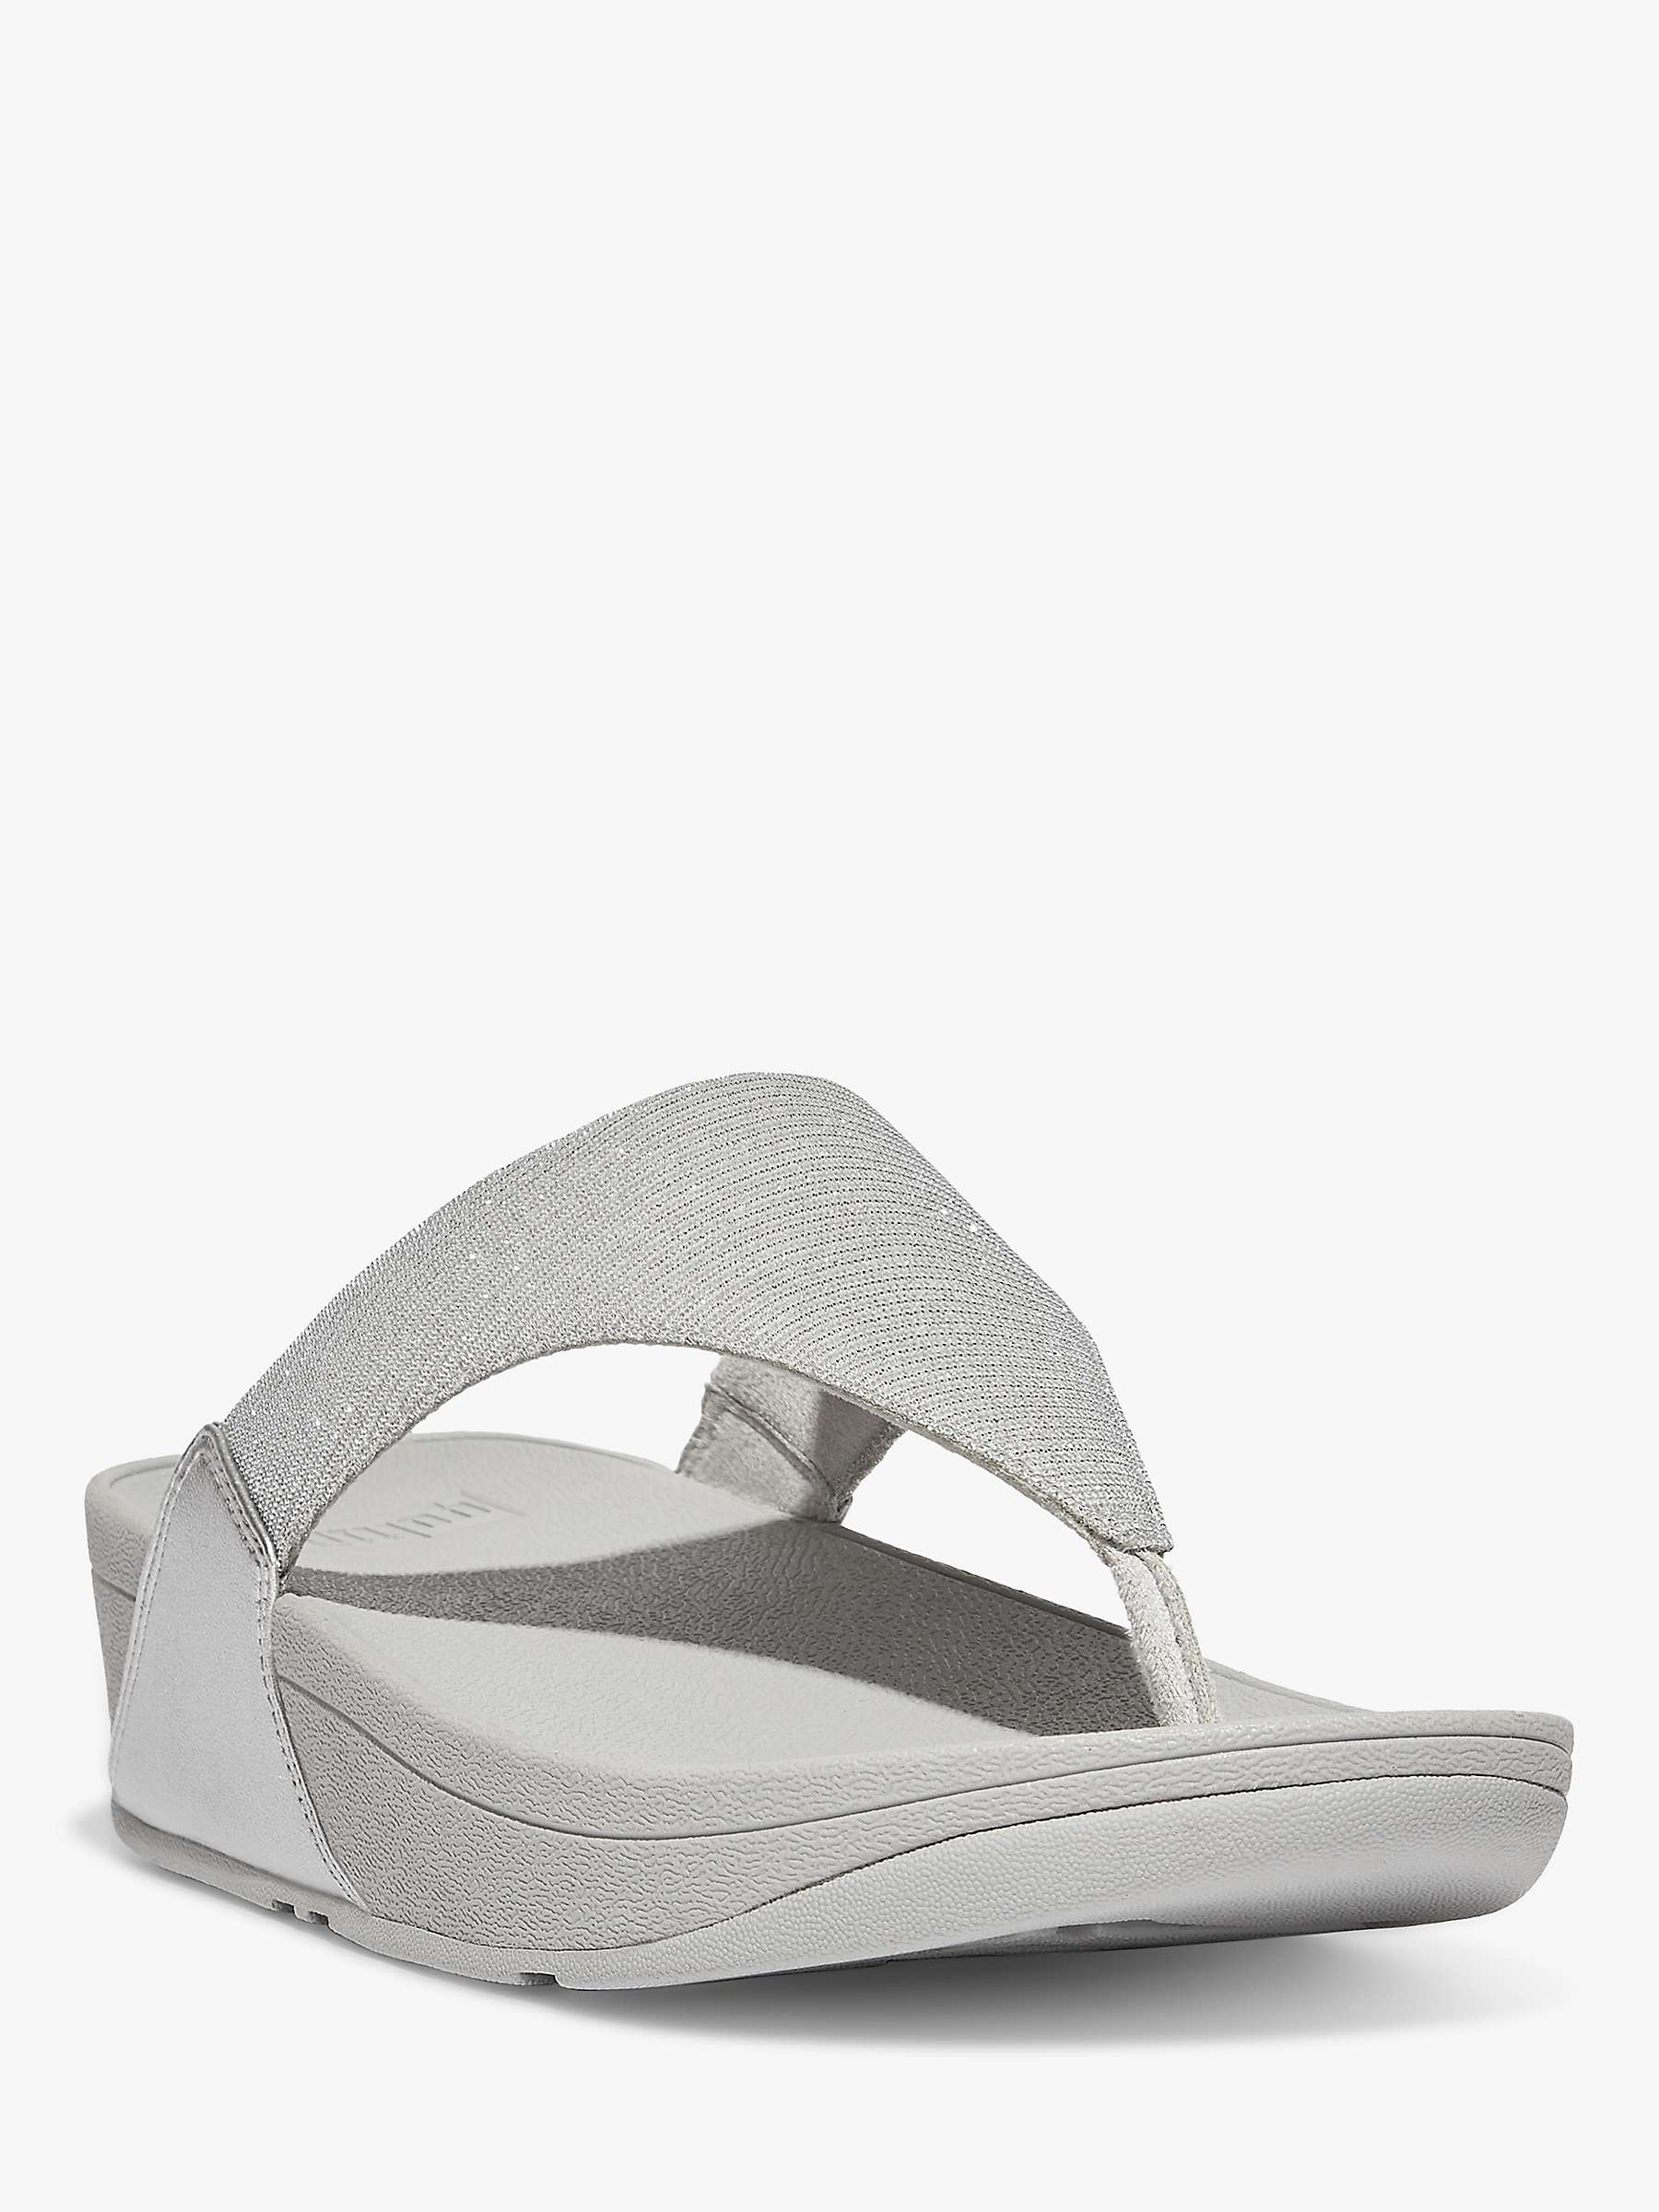 Buy FitFlop Lulu Toe Post Flatform Sandals, Silver Online at johnlewis.com